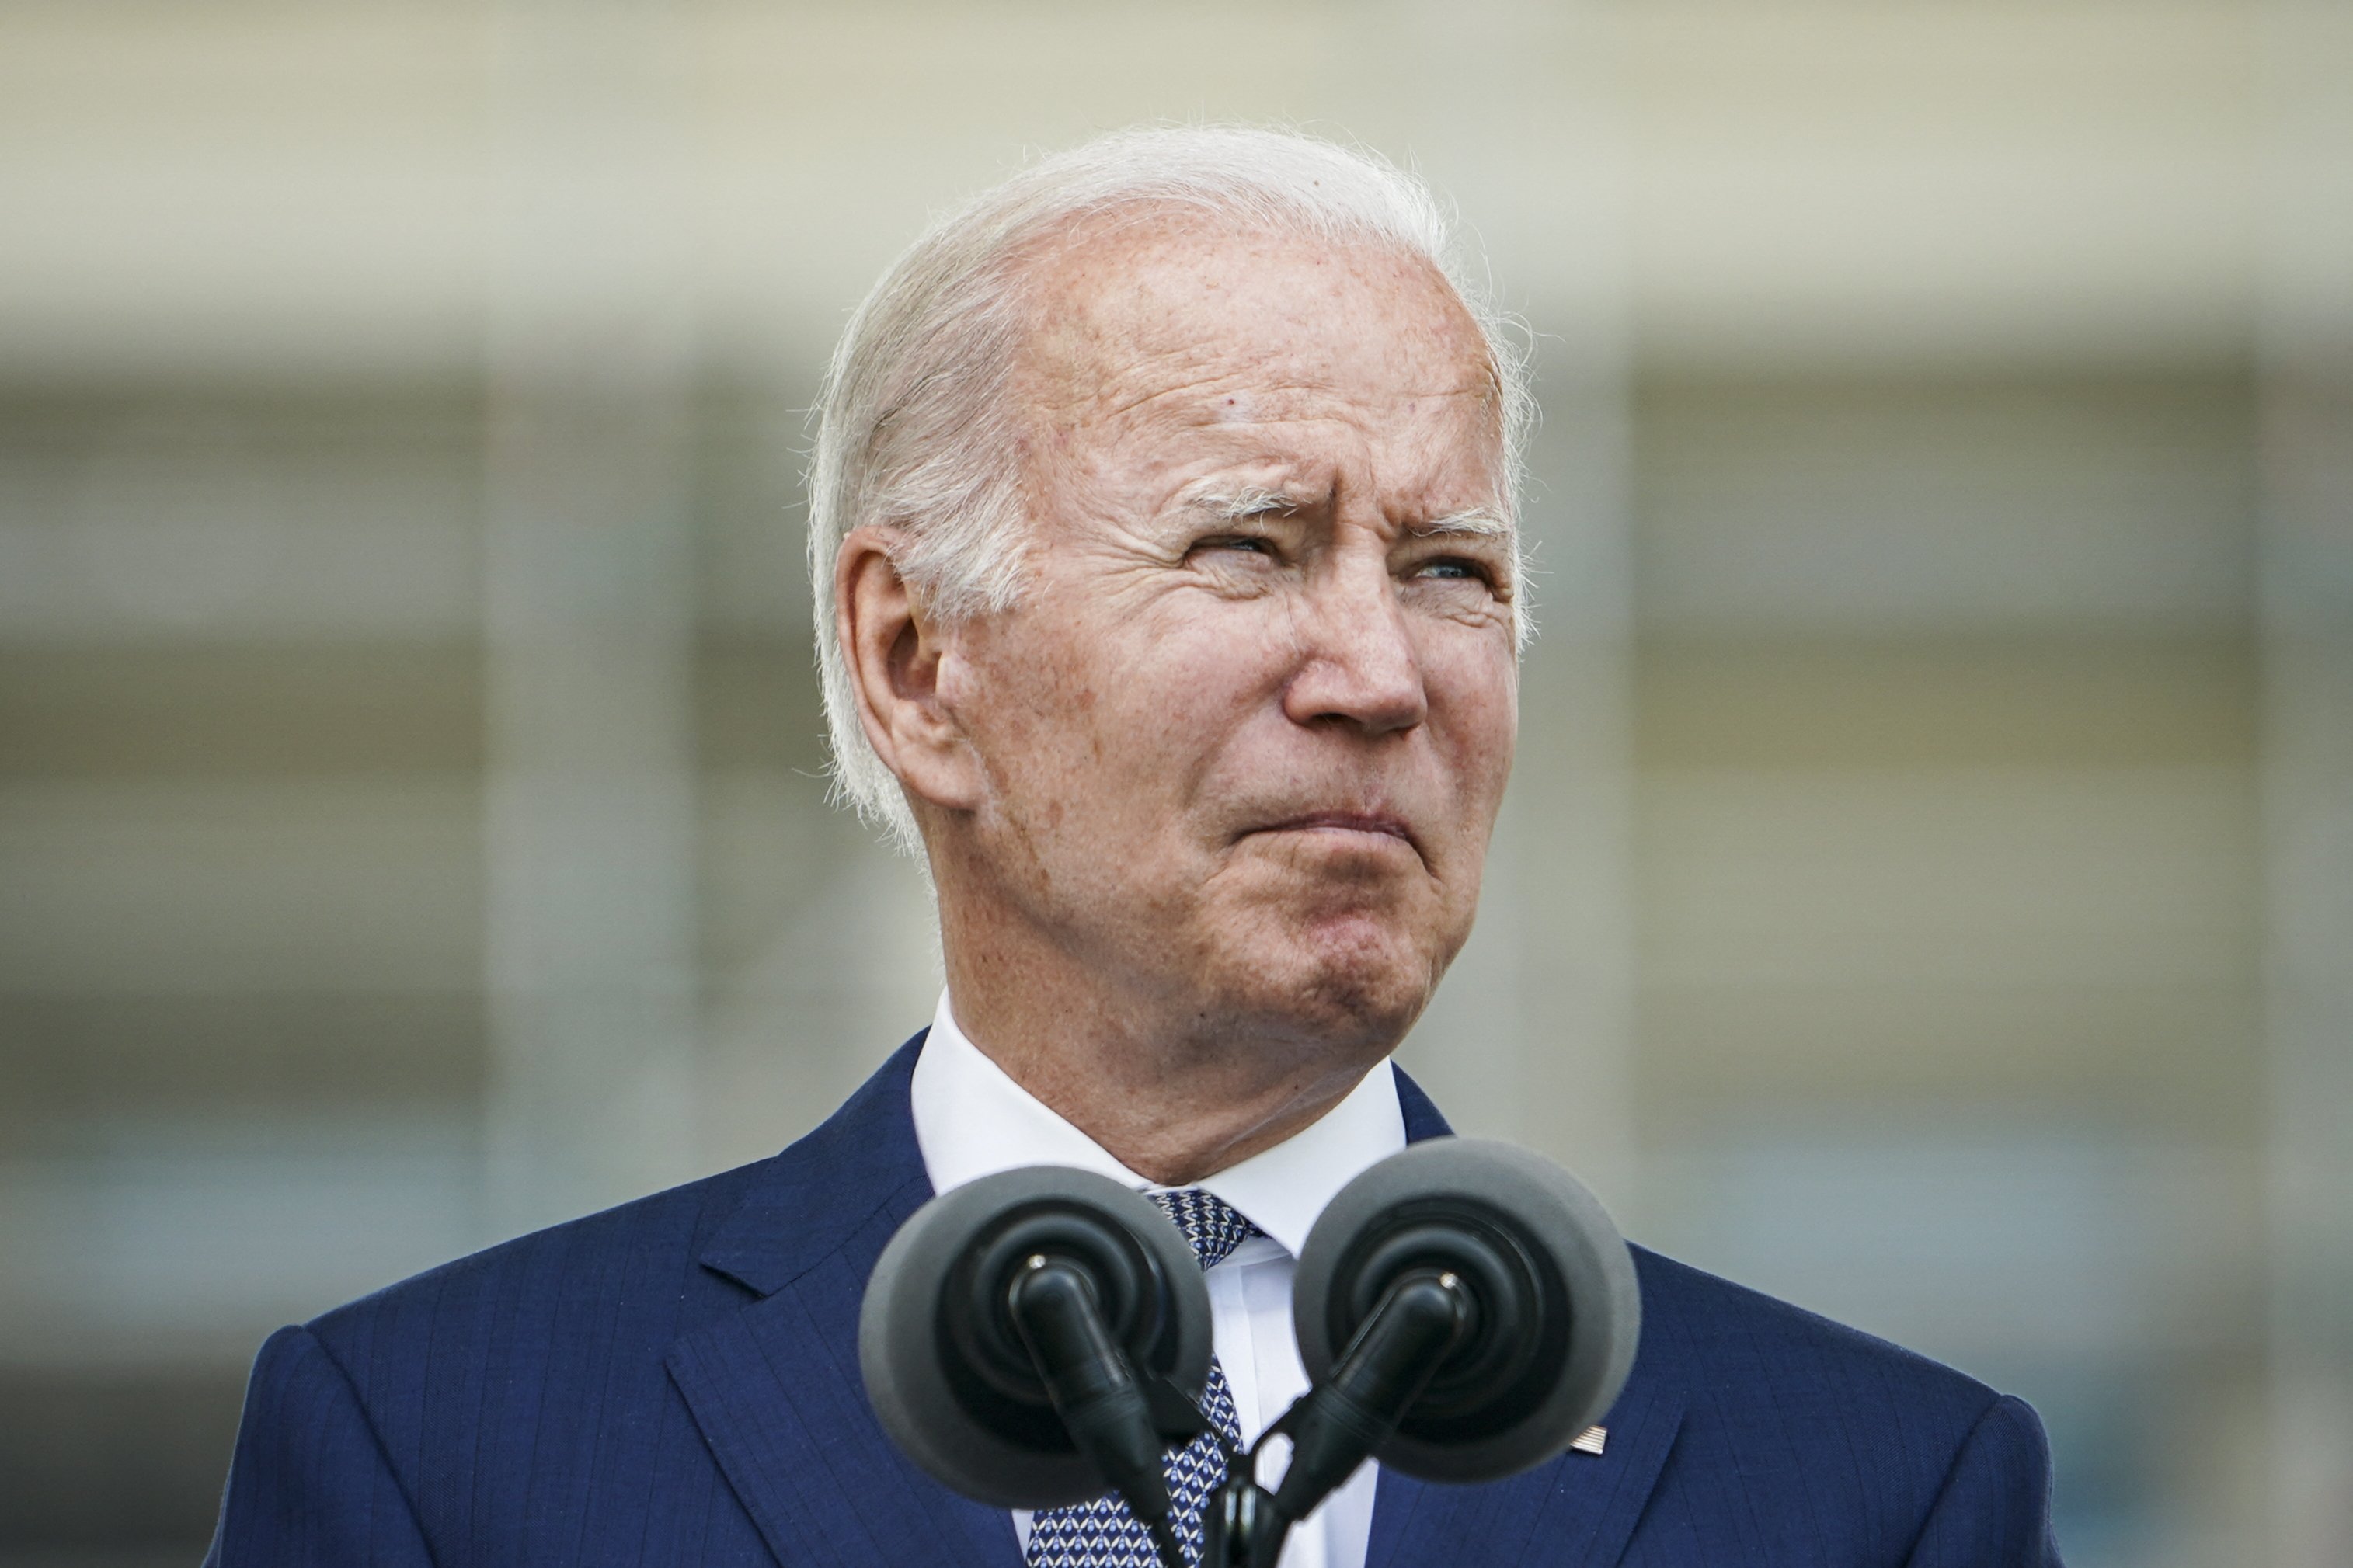 Half of Joe Biden's Twitter followers are fake, audit reveals